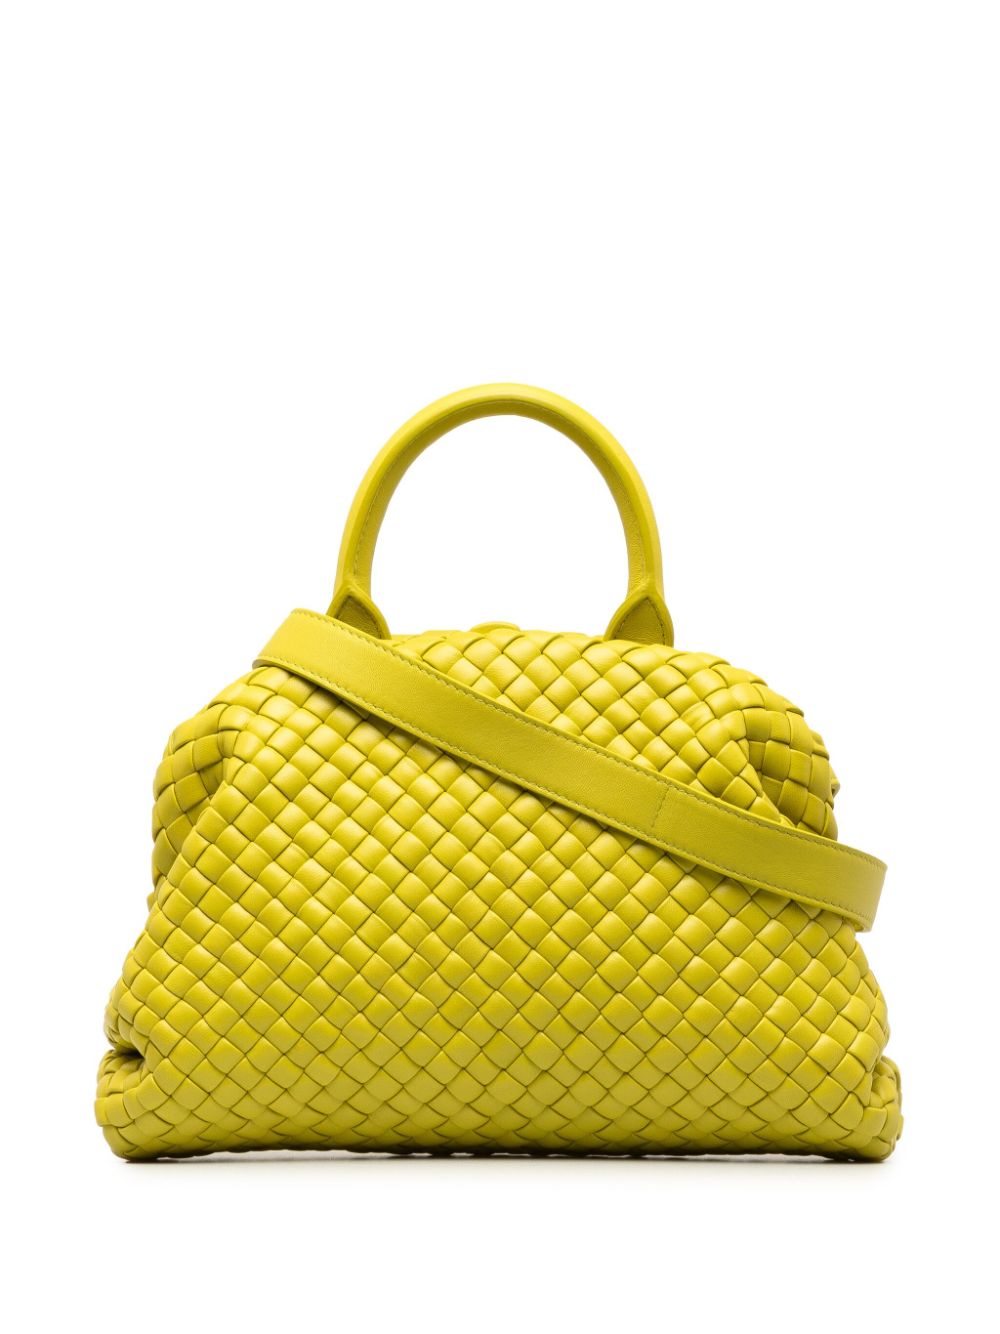 2012-present Medium Intrecciato Top Handle satchel